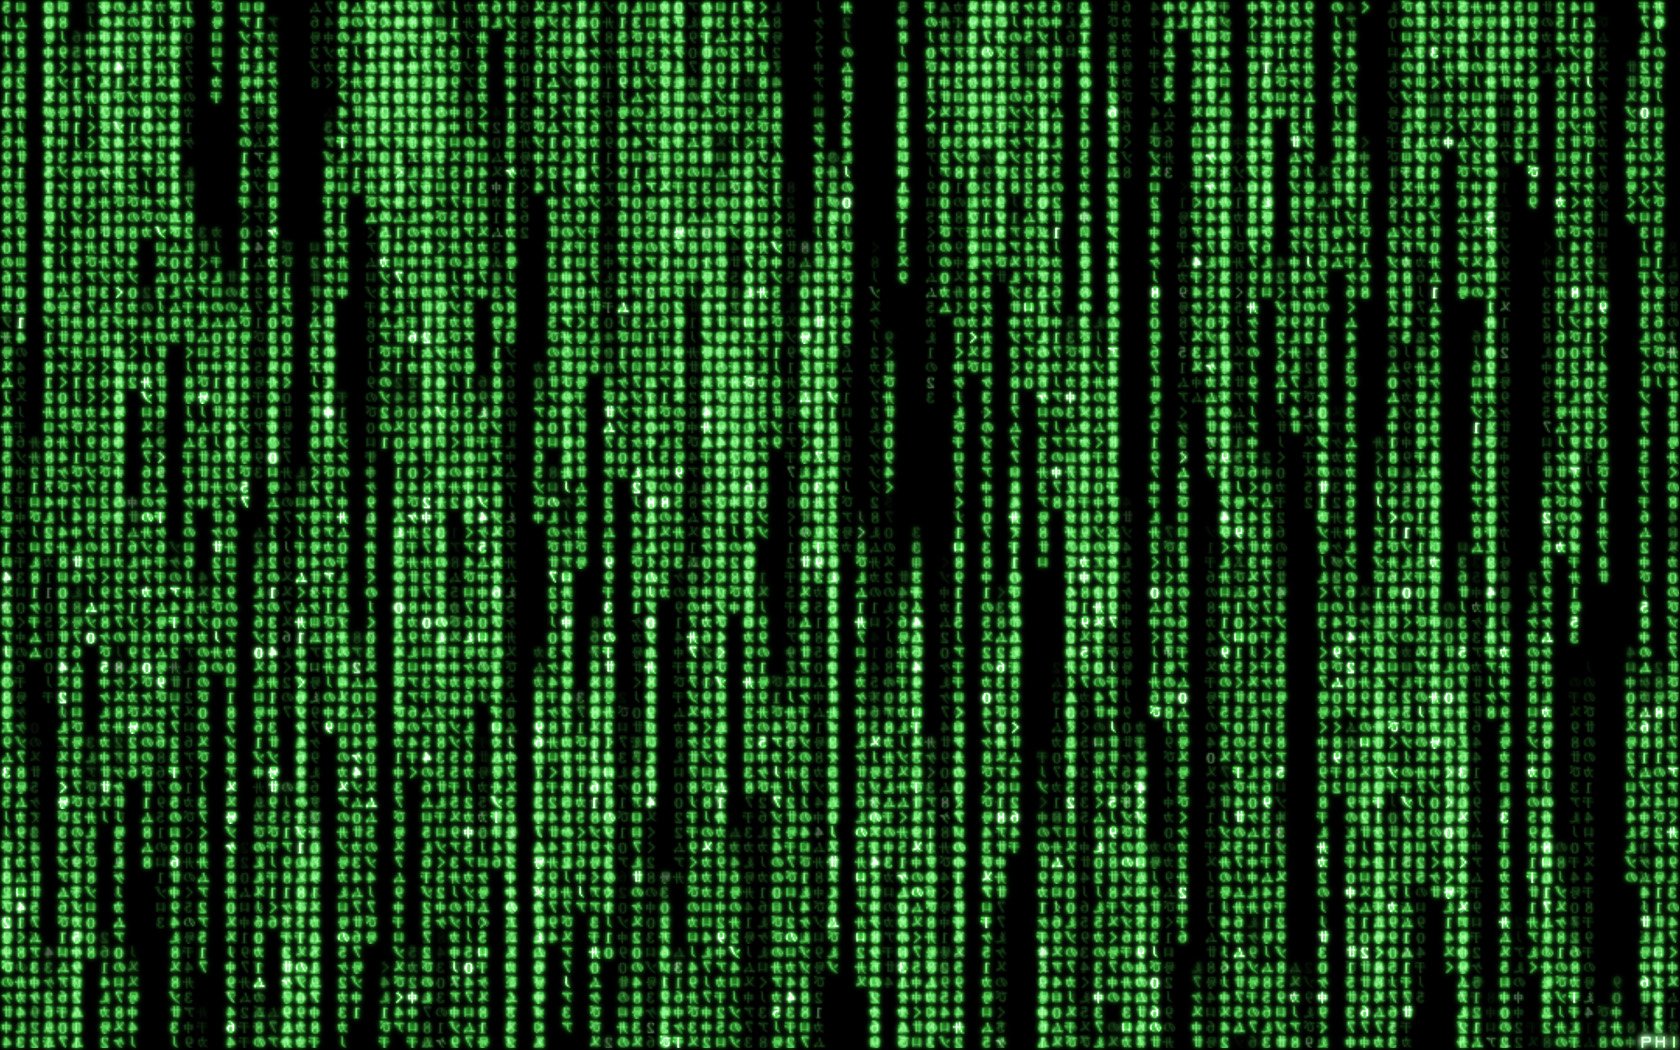 Matrix code by phi AU